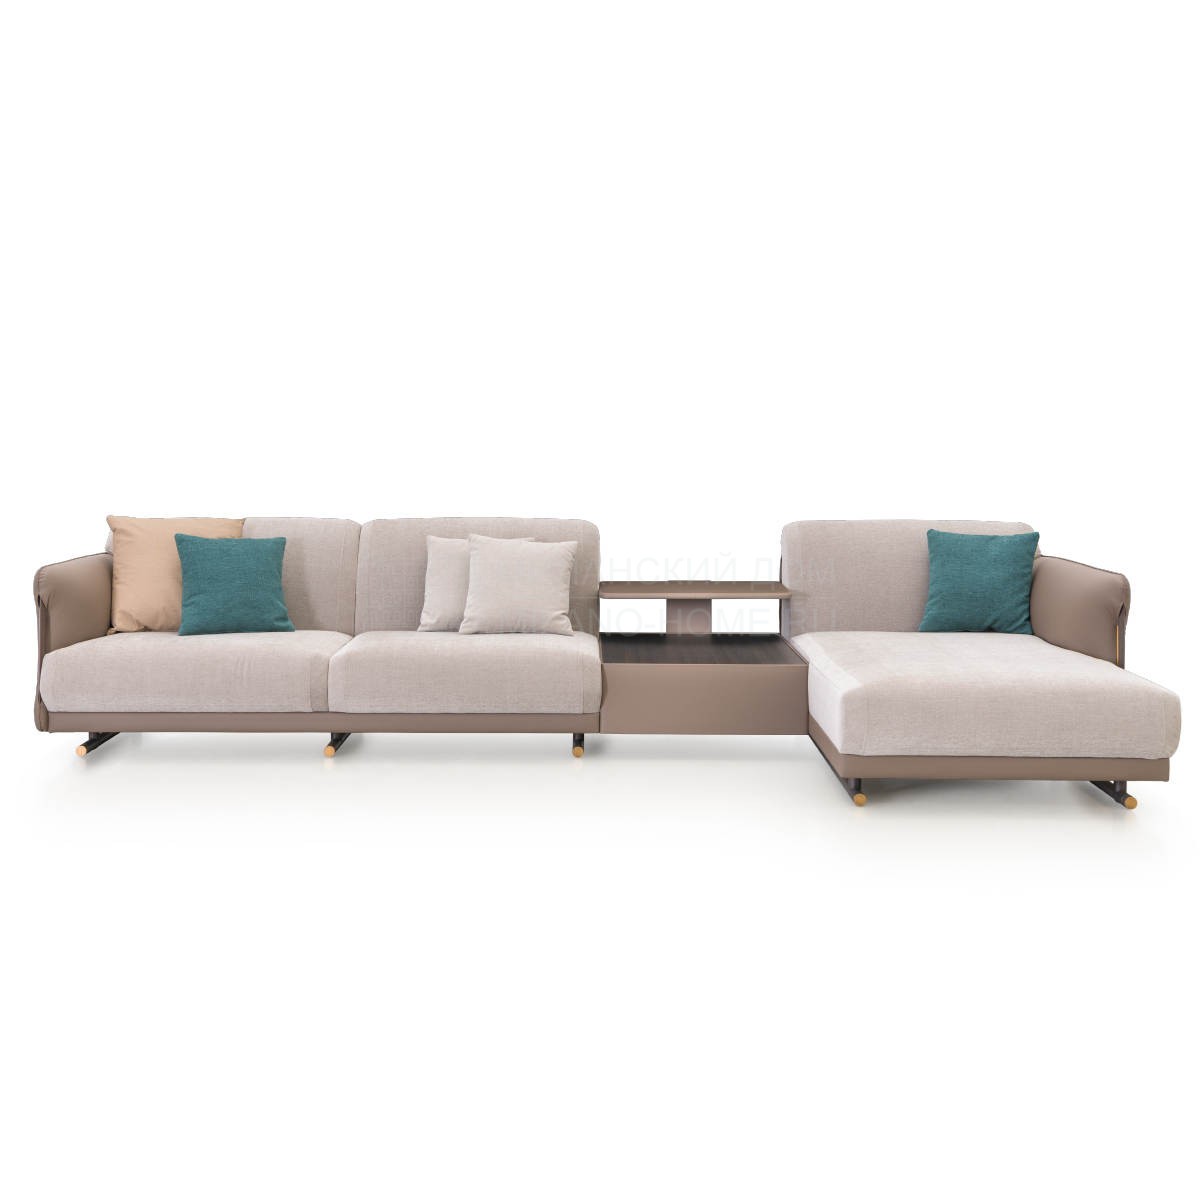 Модульный диван Vine sofa из Италии фабрики TURRI